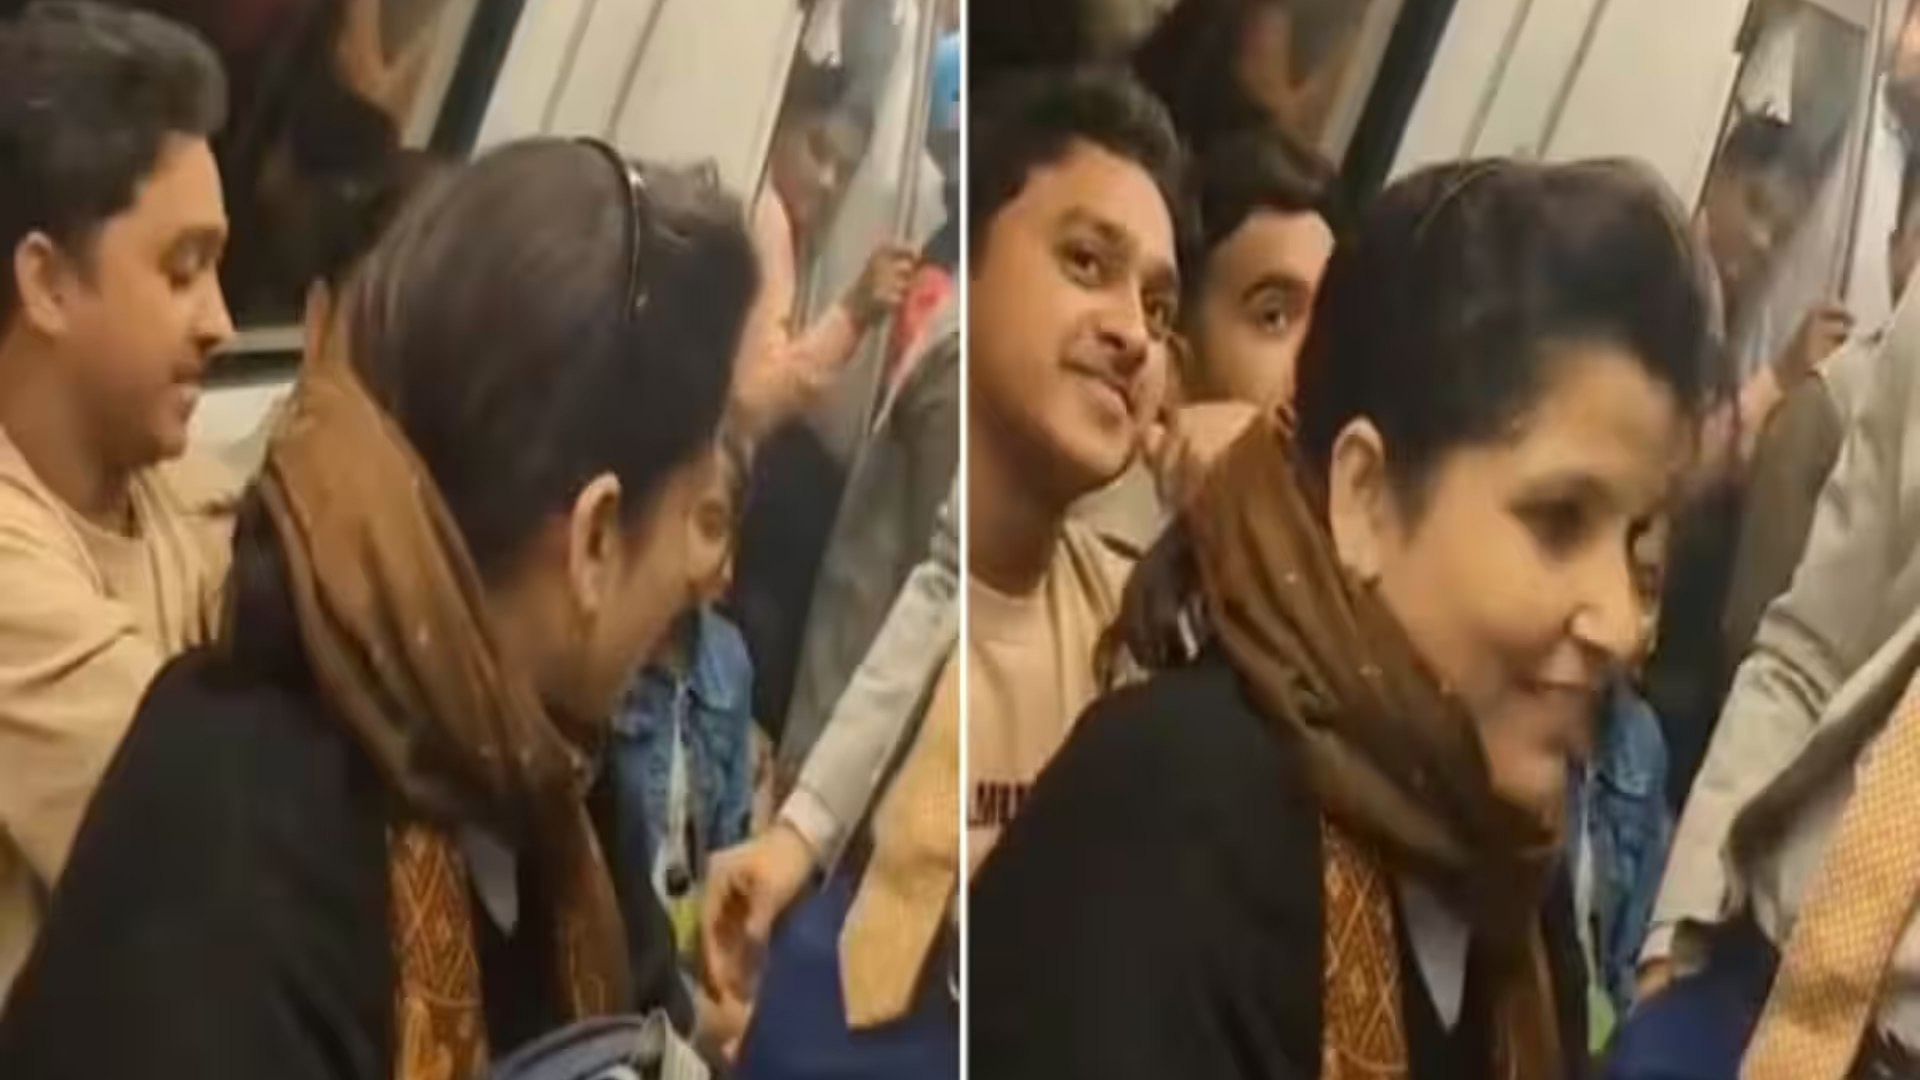 Delhi Metro Video: Woman Forcefully Sits On Man's Lap Inside Crowded Delhi Metro Train